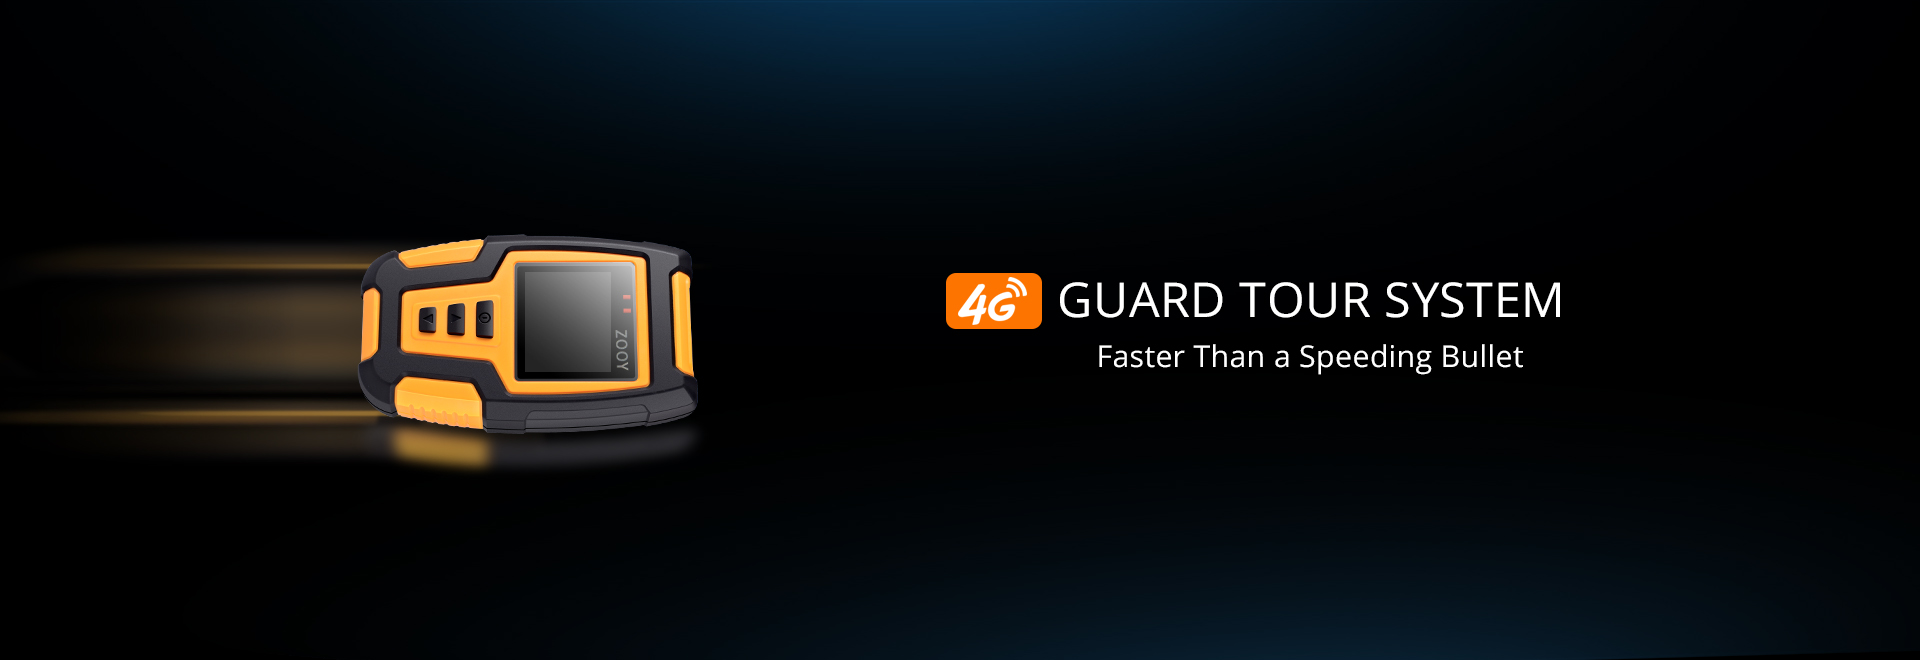 4g guard tour system